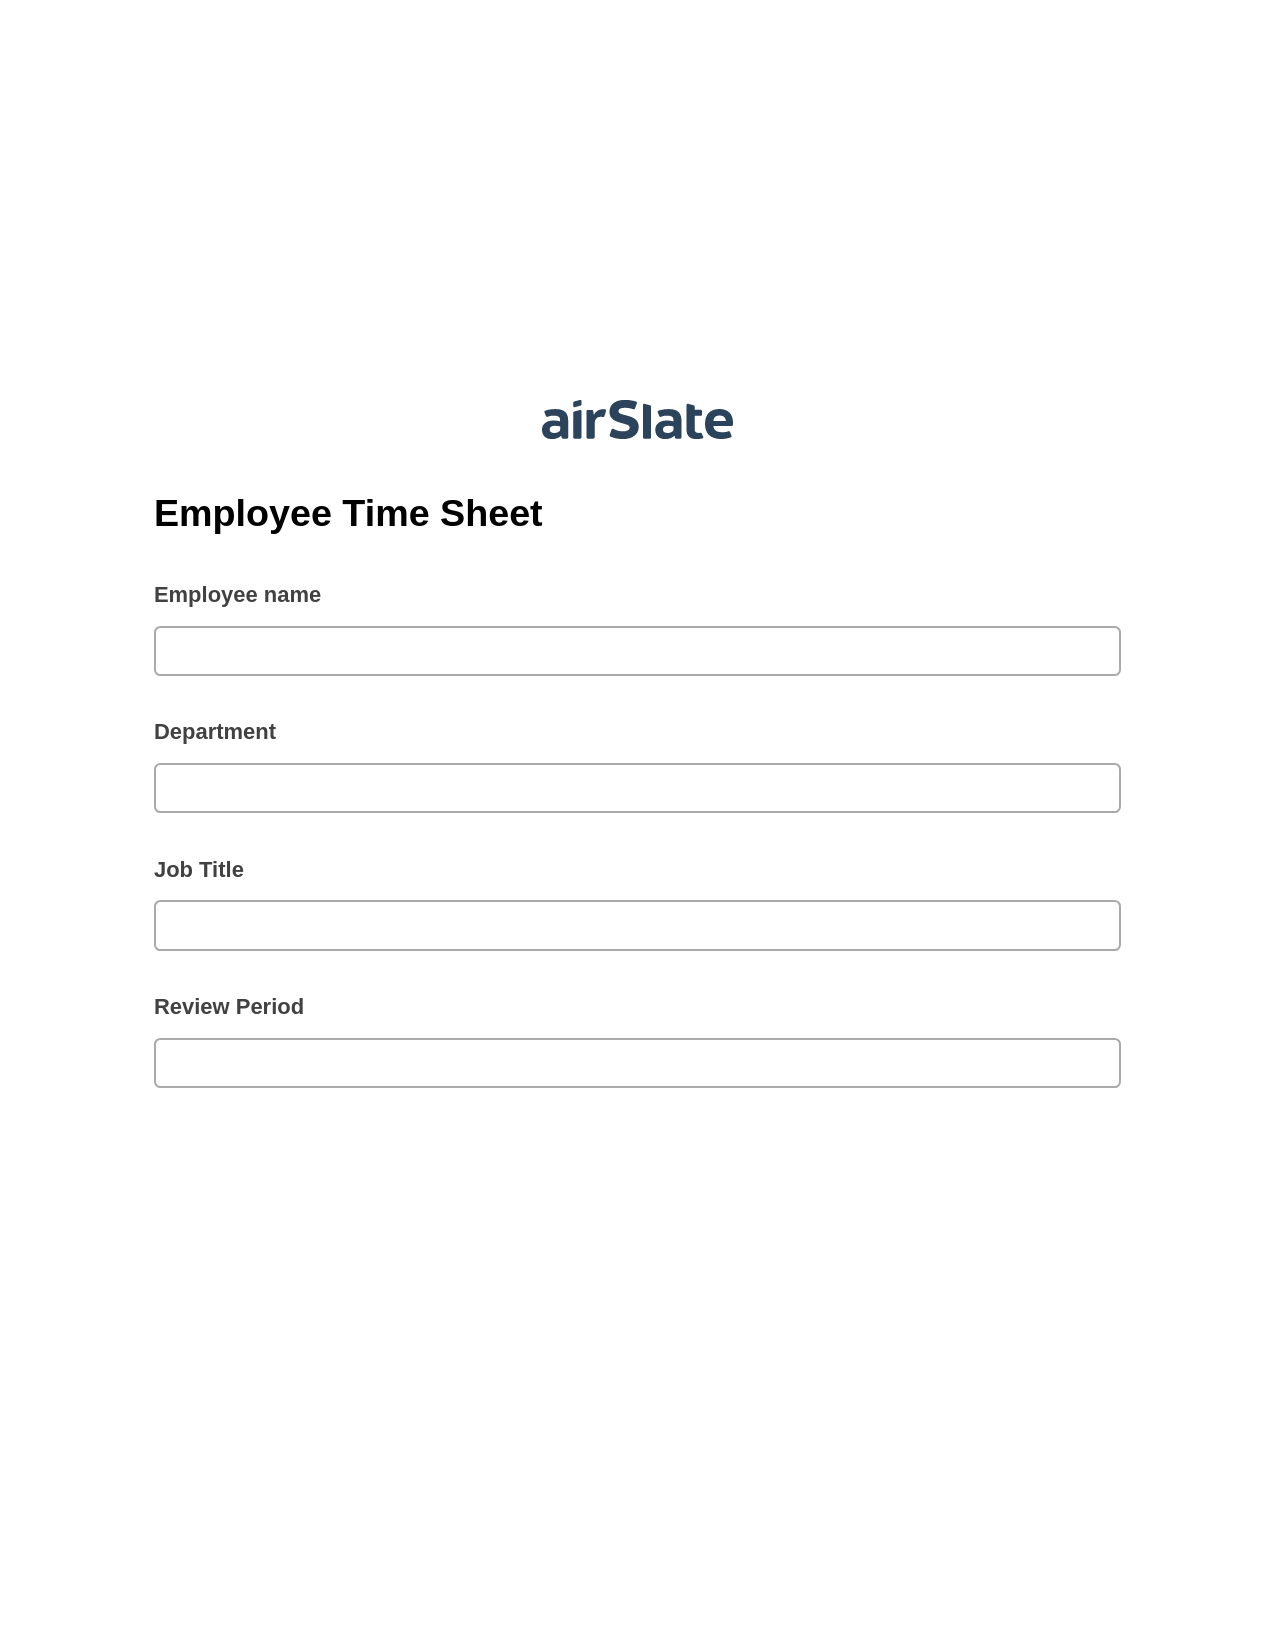 Multirole Employee Time Sheet Pre-fill from Excel Spreadsheet Bot, Update Audit Trail Bot, Webhook Postfinish Bot